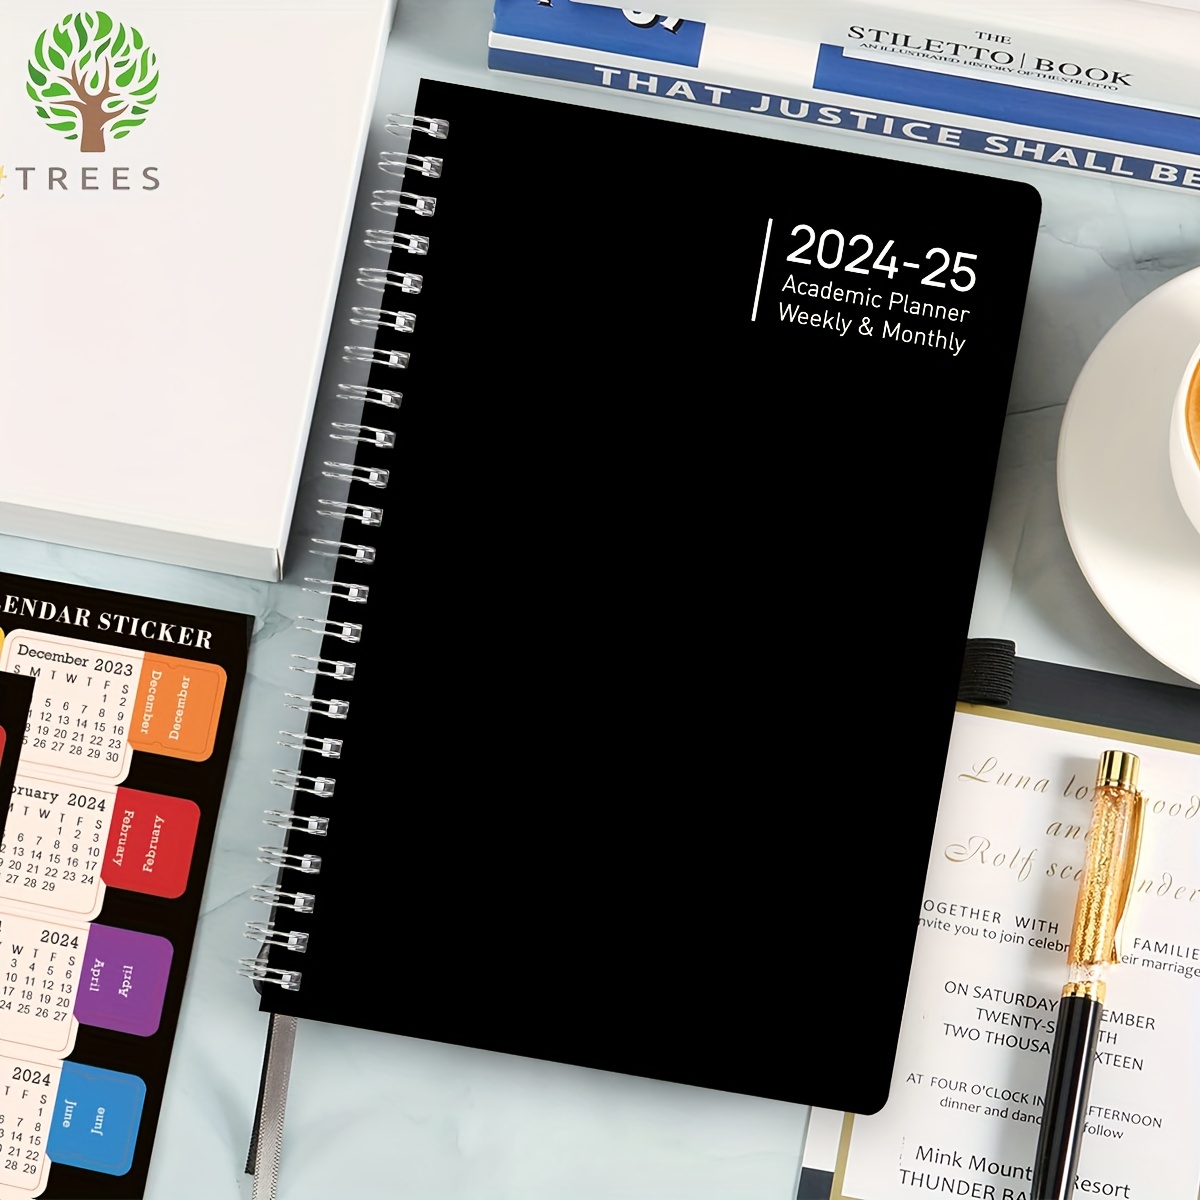 Planner mensile 3 anni 2022-2024: Calendario 36 mesi Planner triennale  2021-2023, taccuino per appuntamenti, agenda mensile, diario (Hardcover)